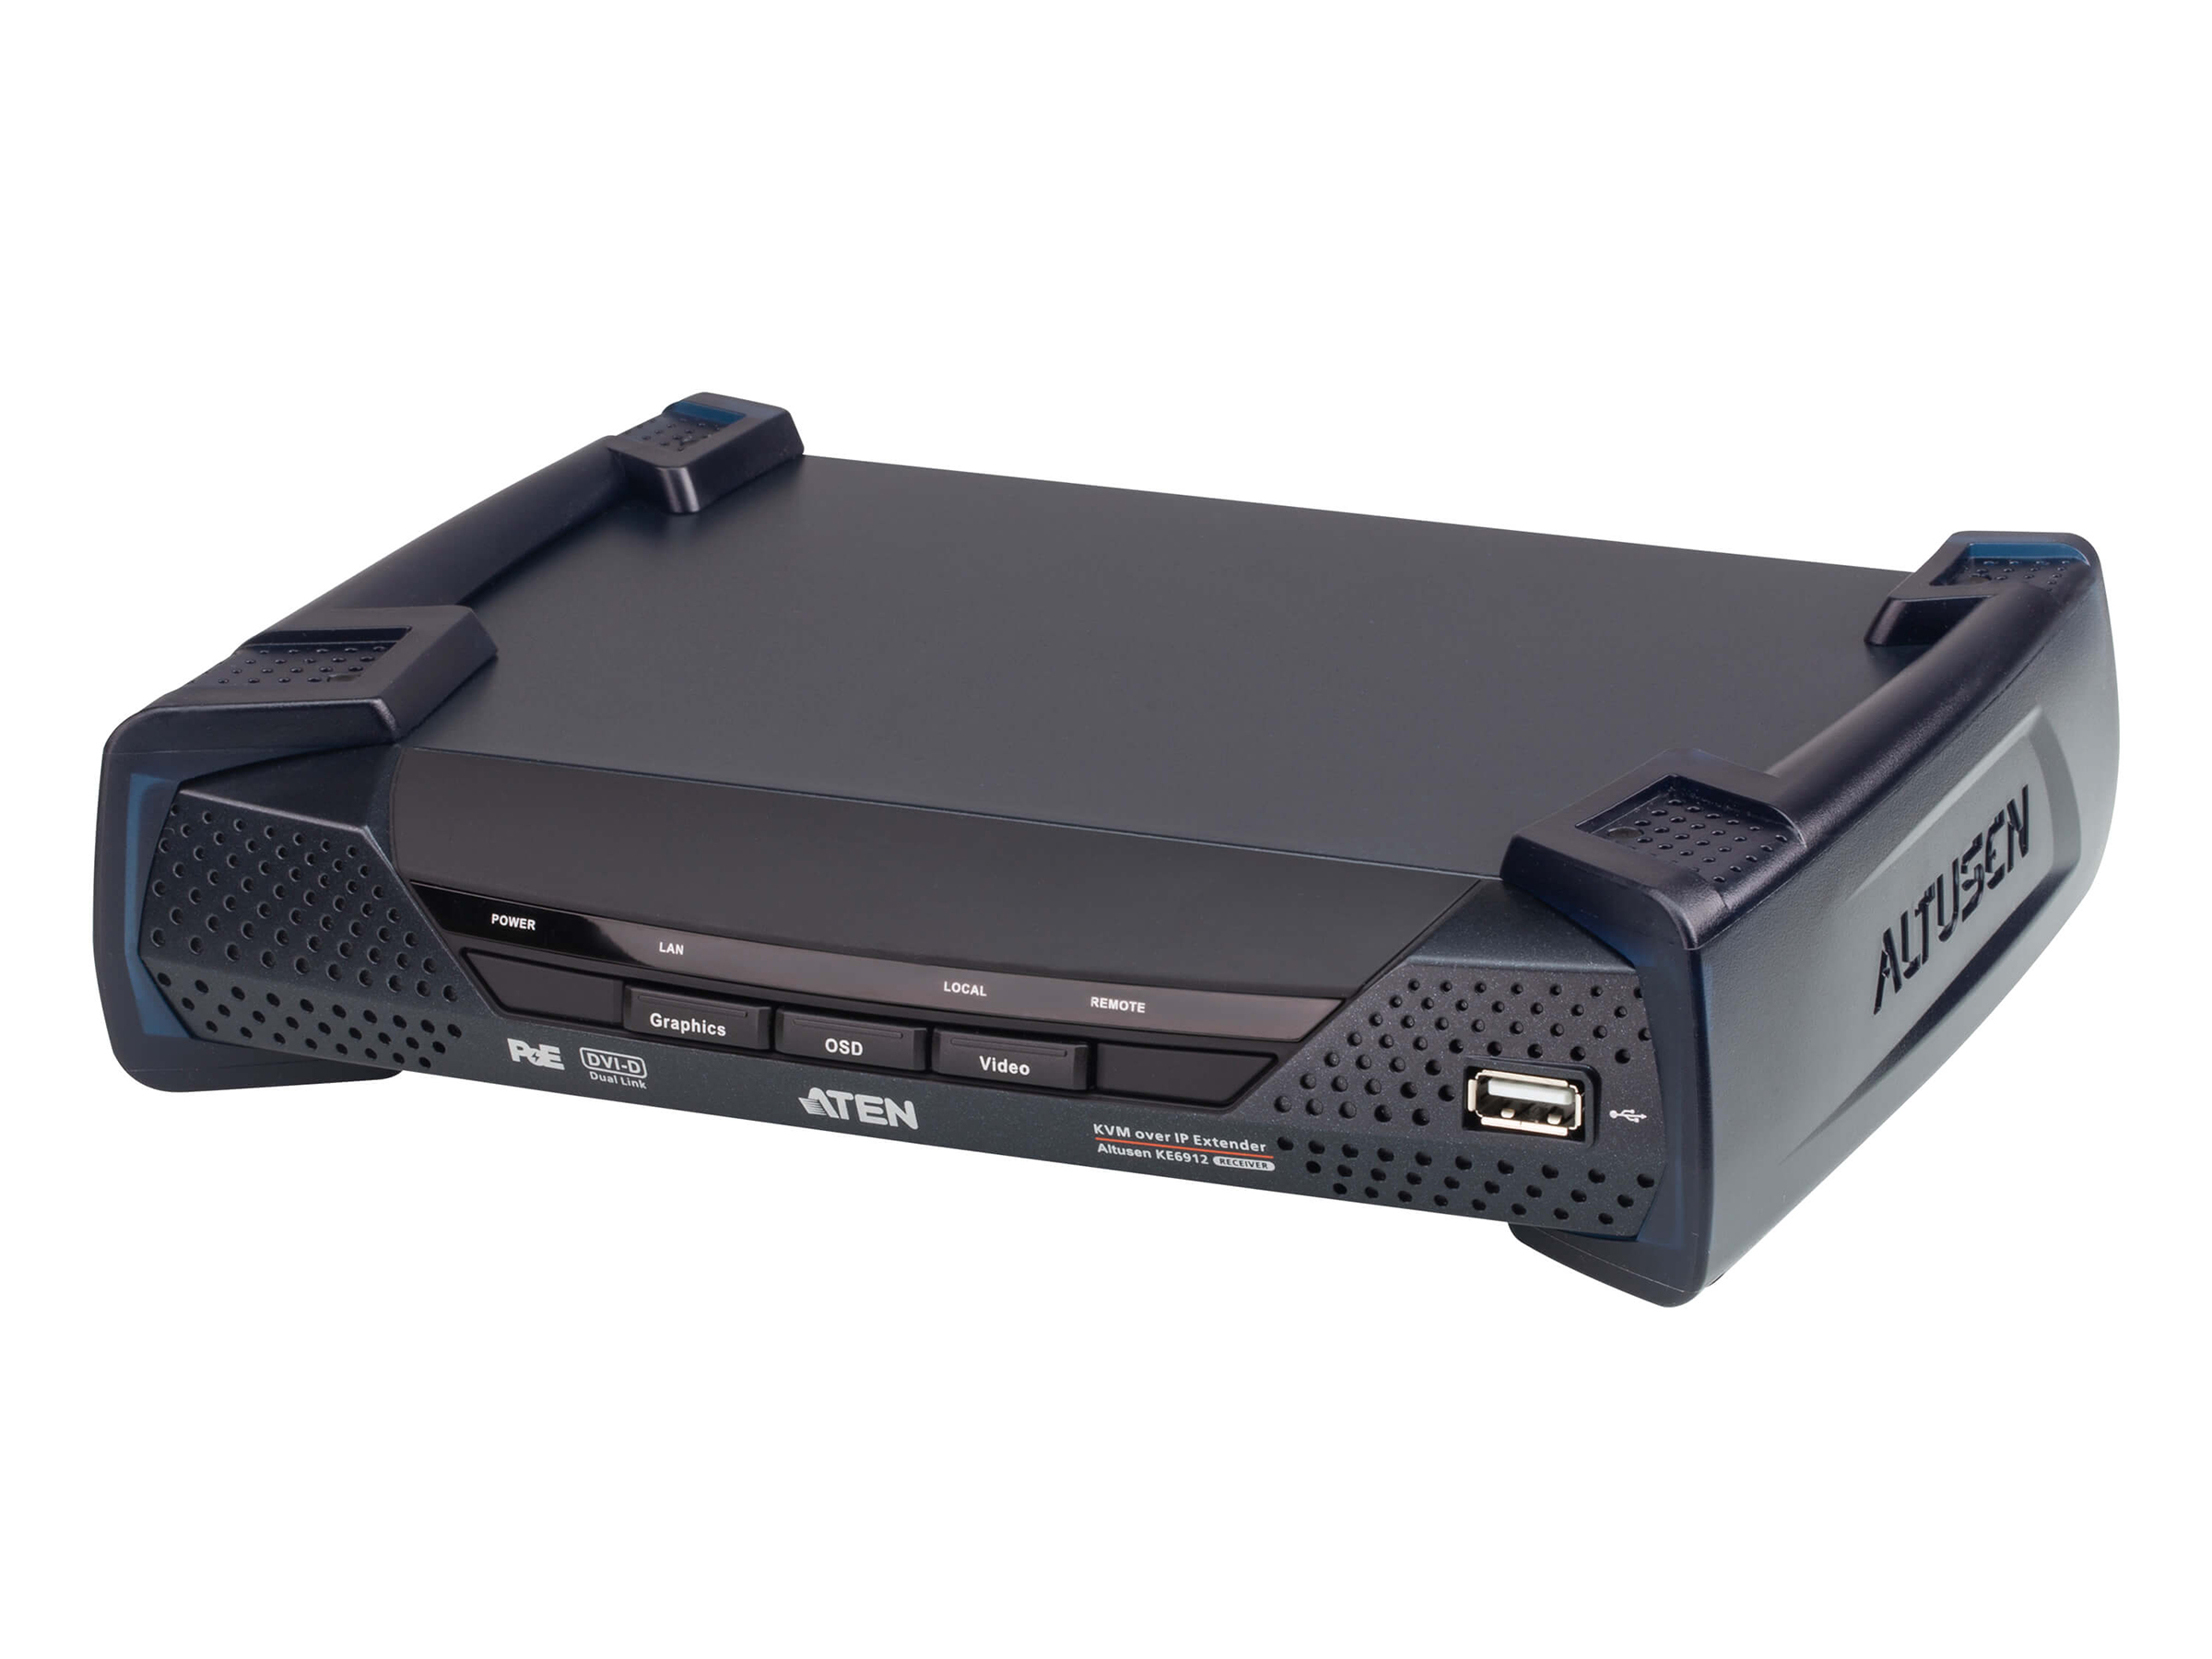 KE6912R USB Dual Link DVI-D Single Display KVM over IP Extender (Receiver) with Audio/POE by Aten